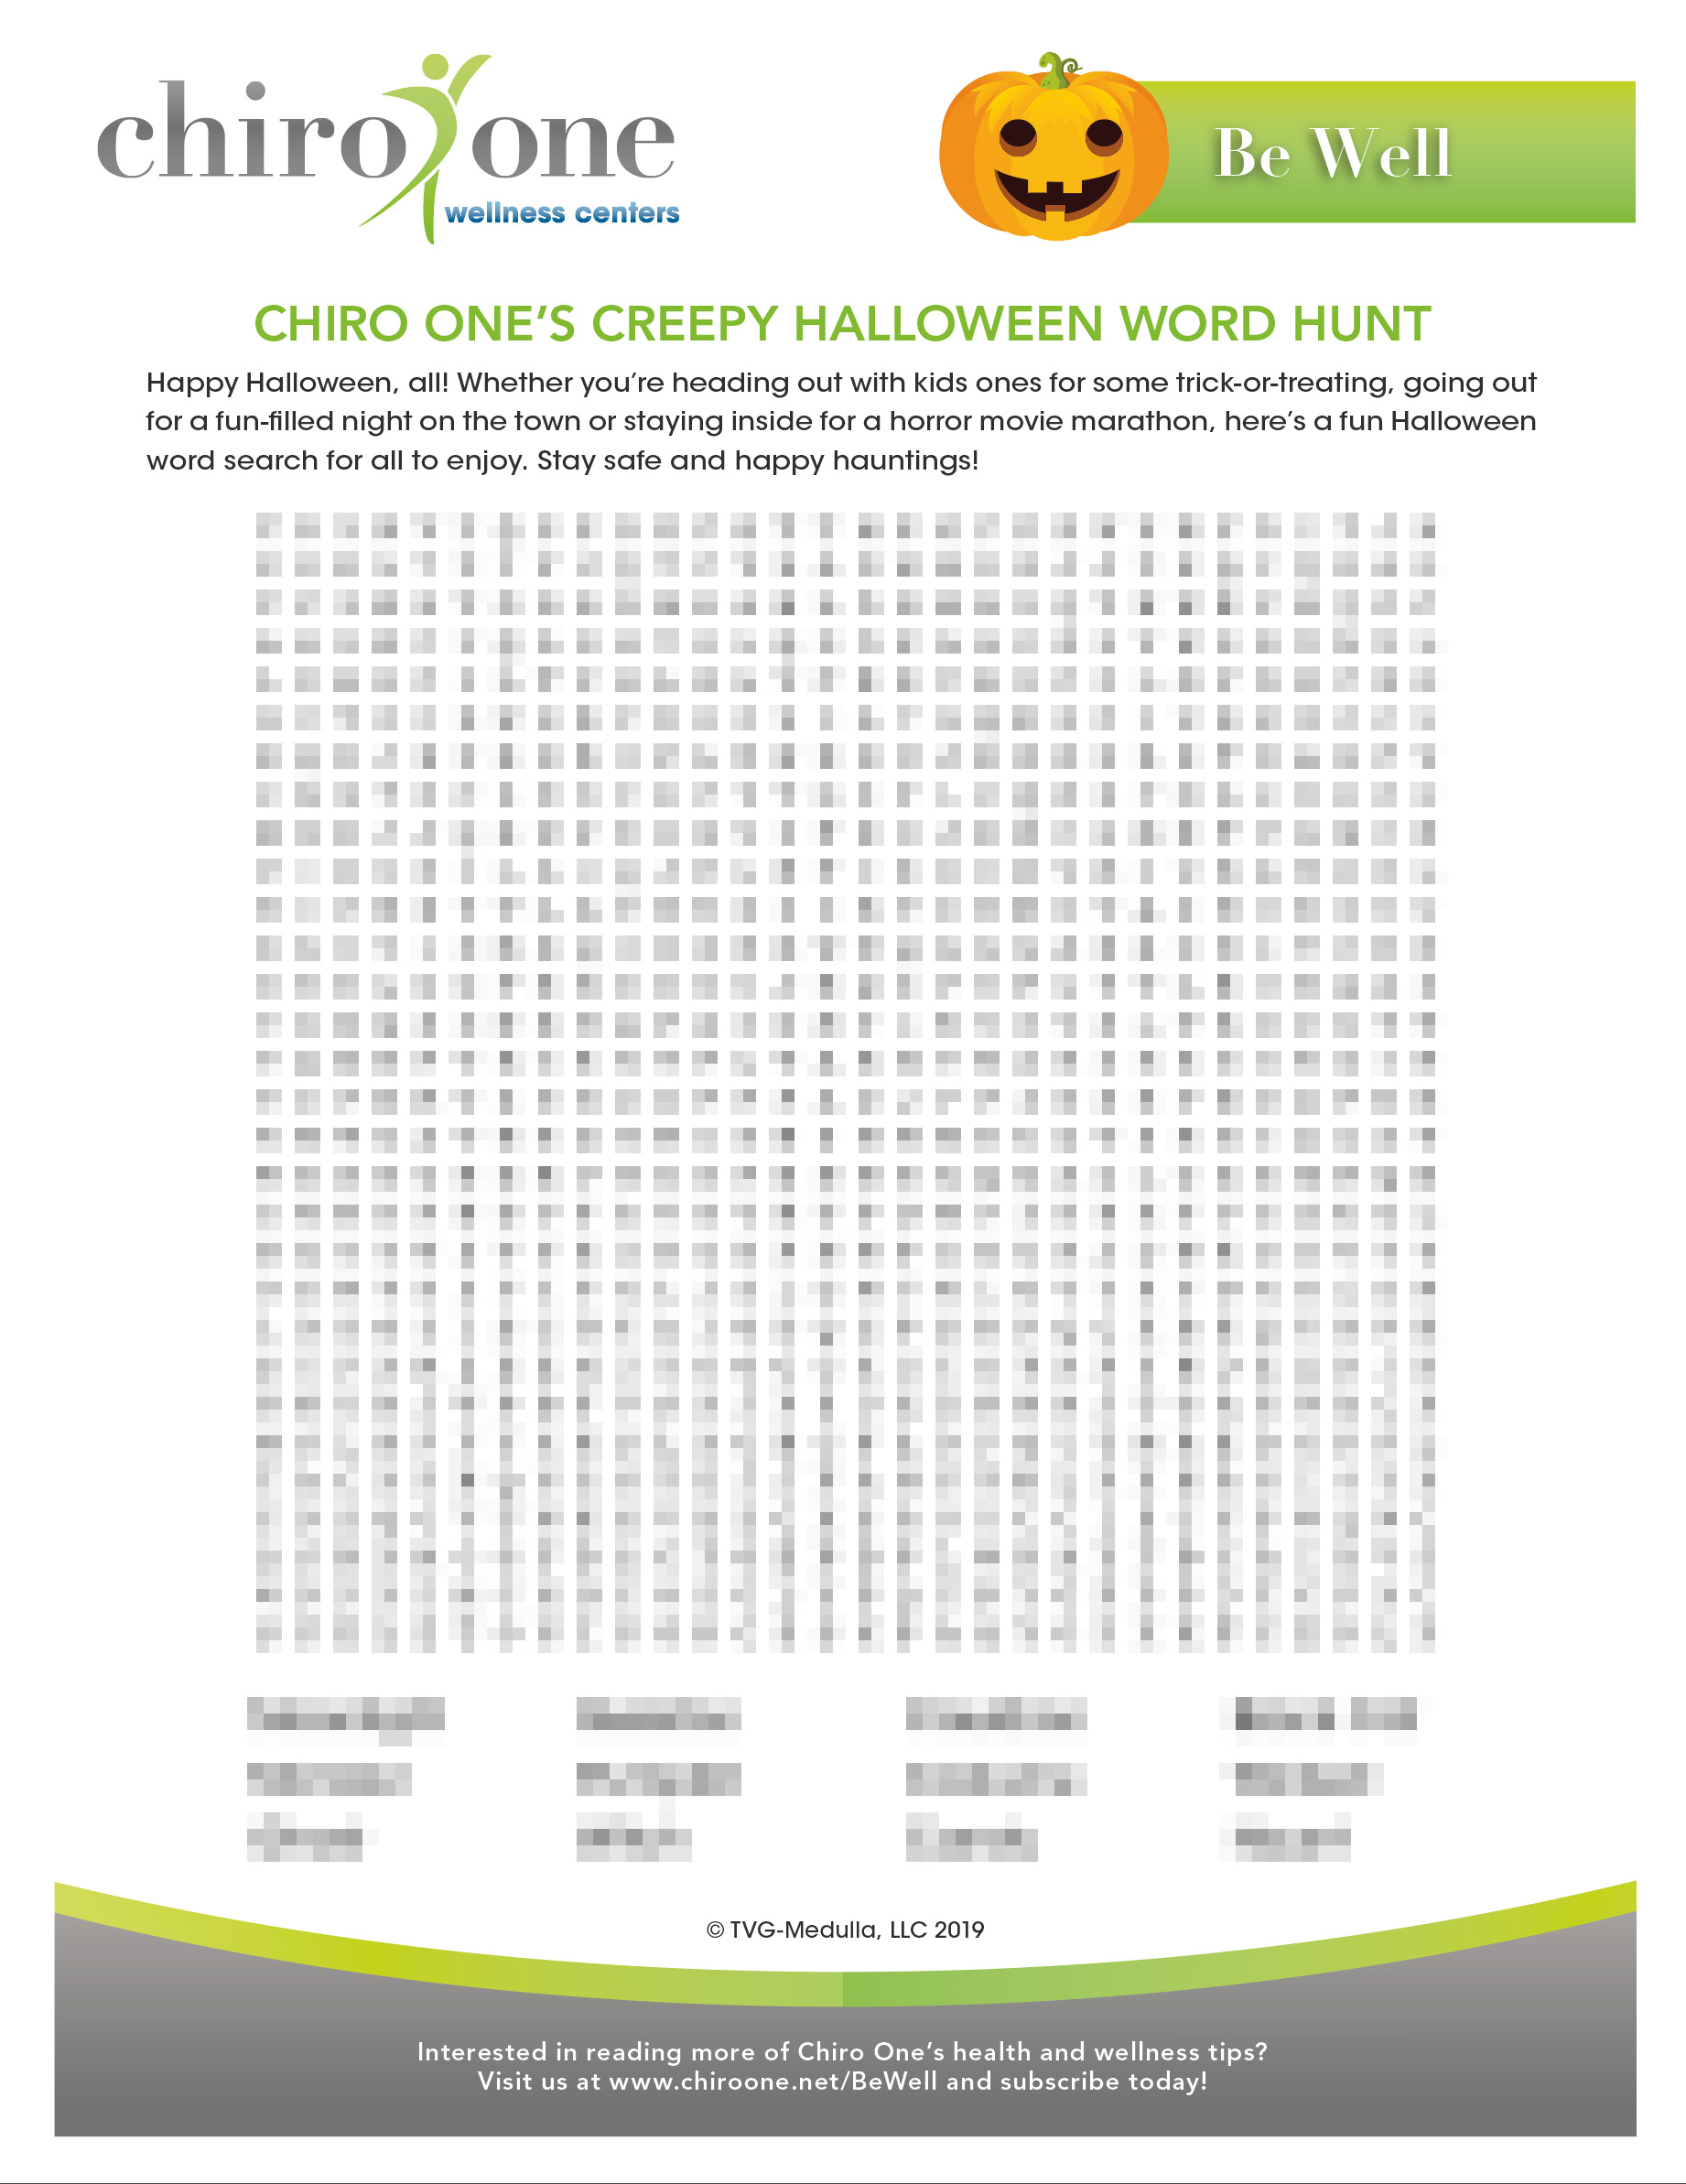 Download: Chiro One’s Creepy Halloween Word Hunt